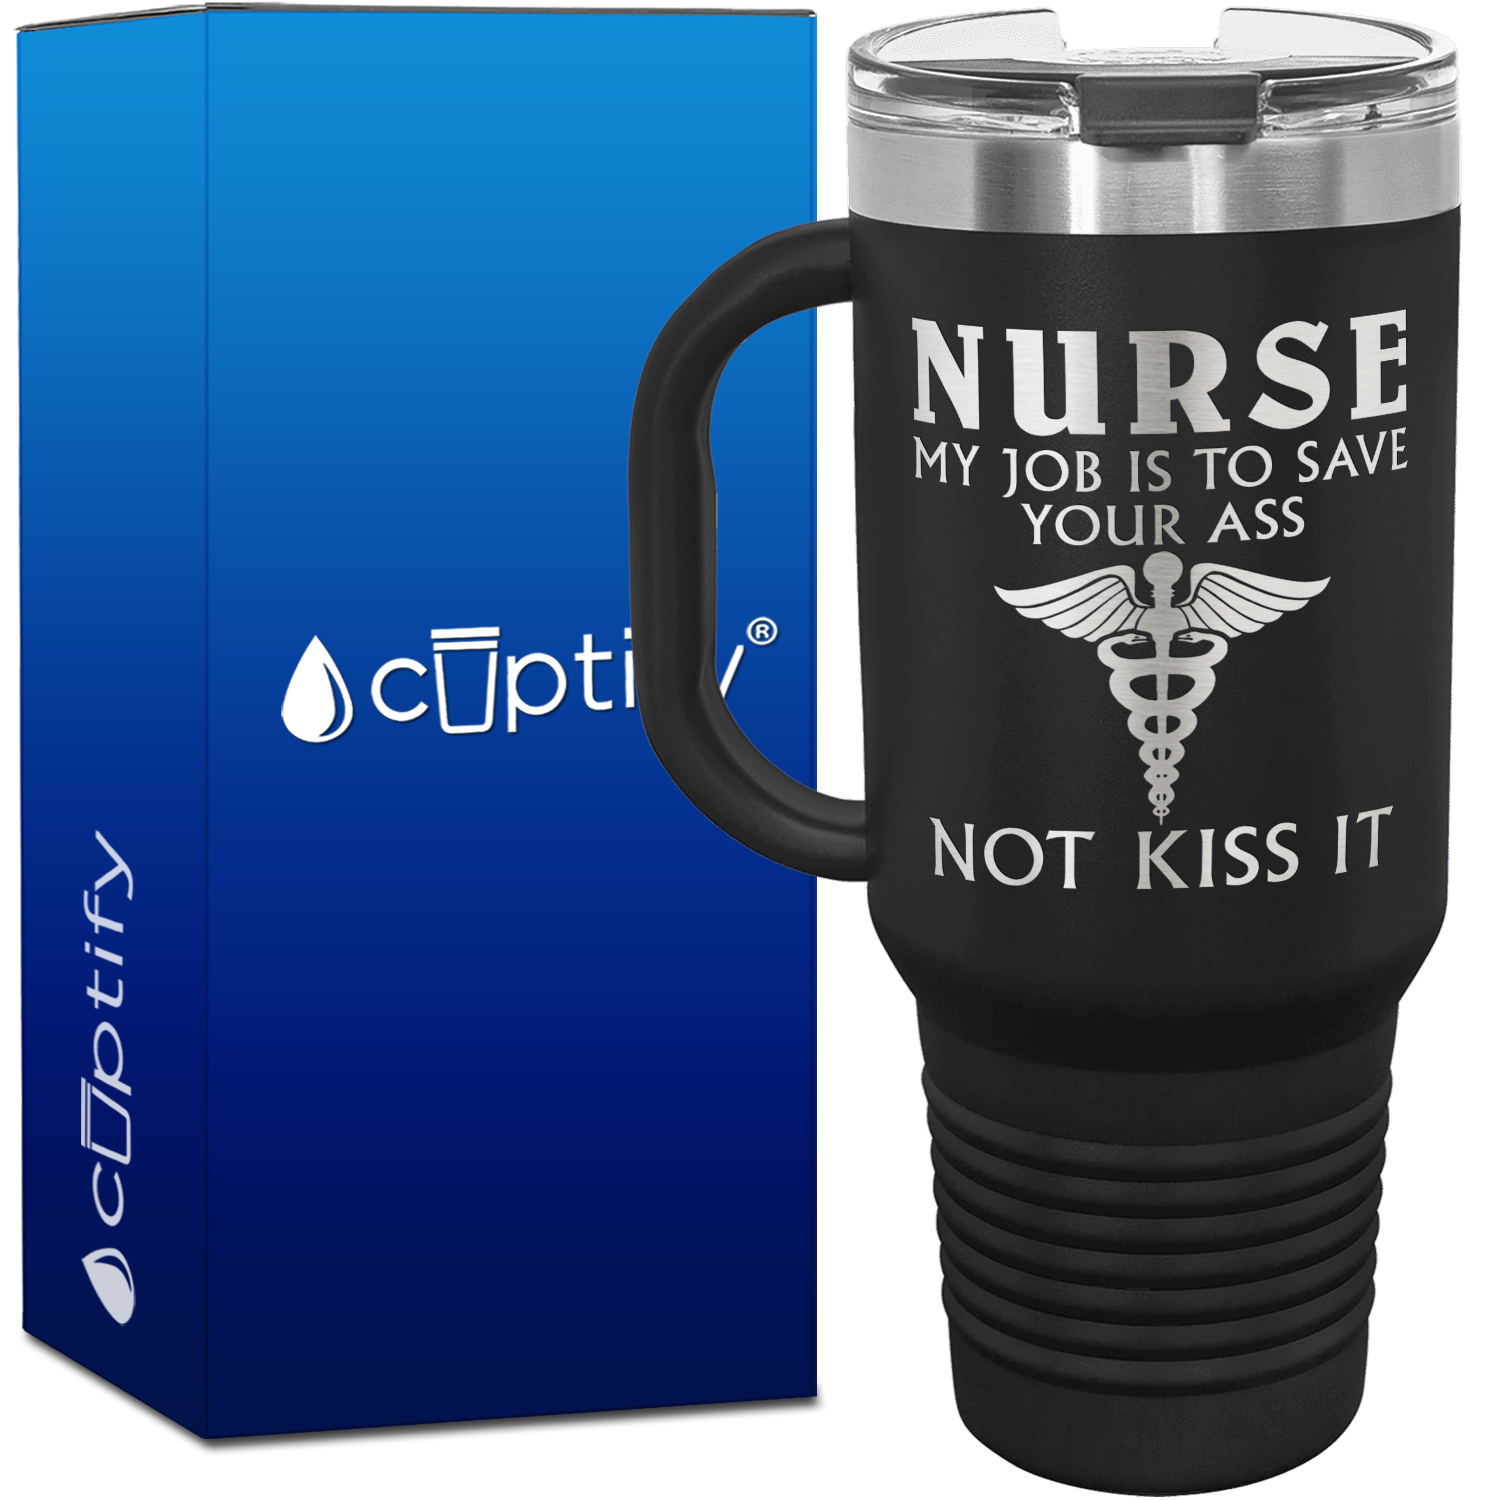 Nurse My Job is to Save Your Ass Not Kiss It 40oz Nurse Travel Mug